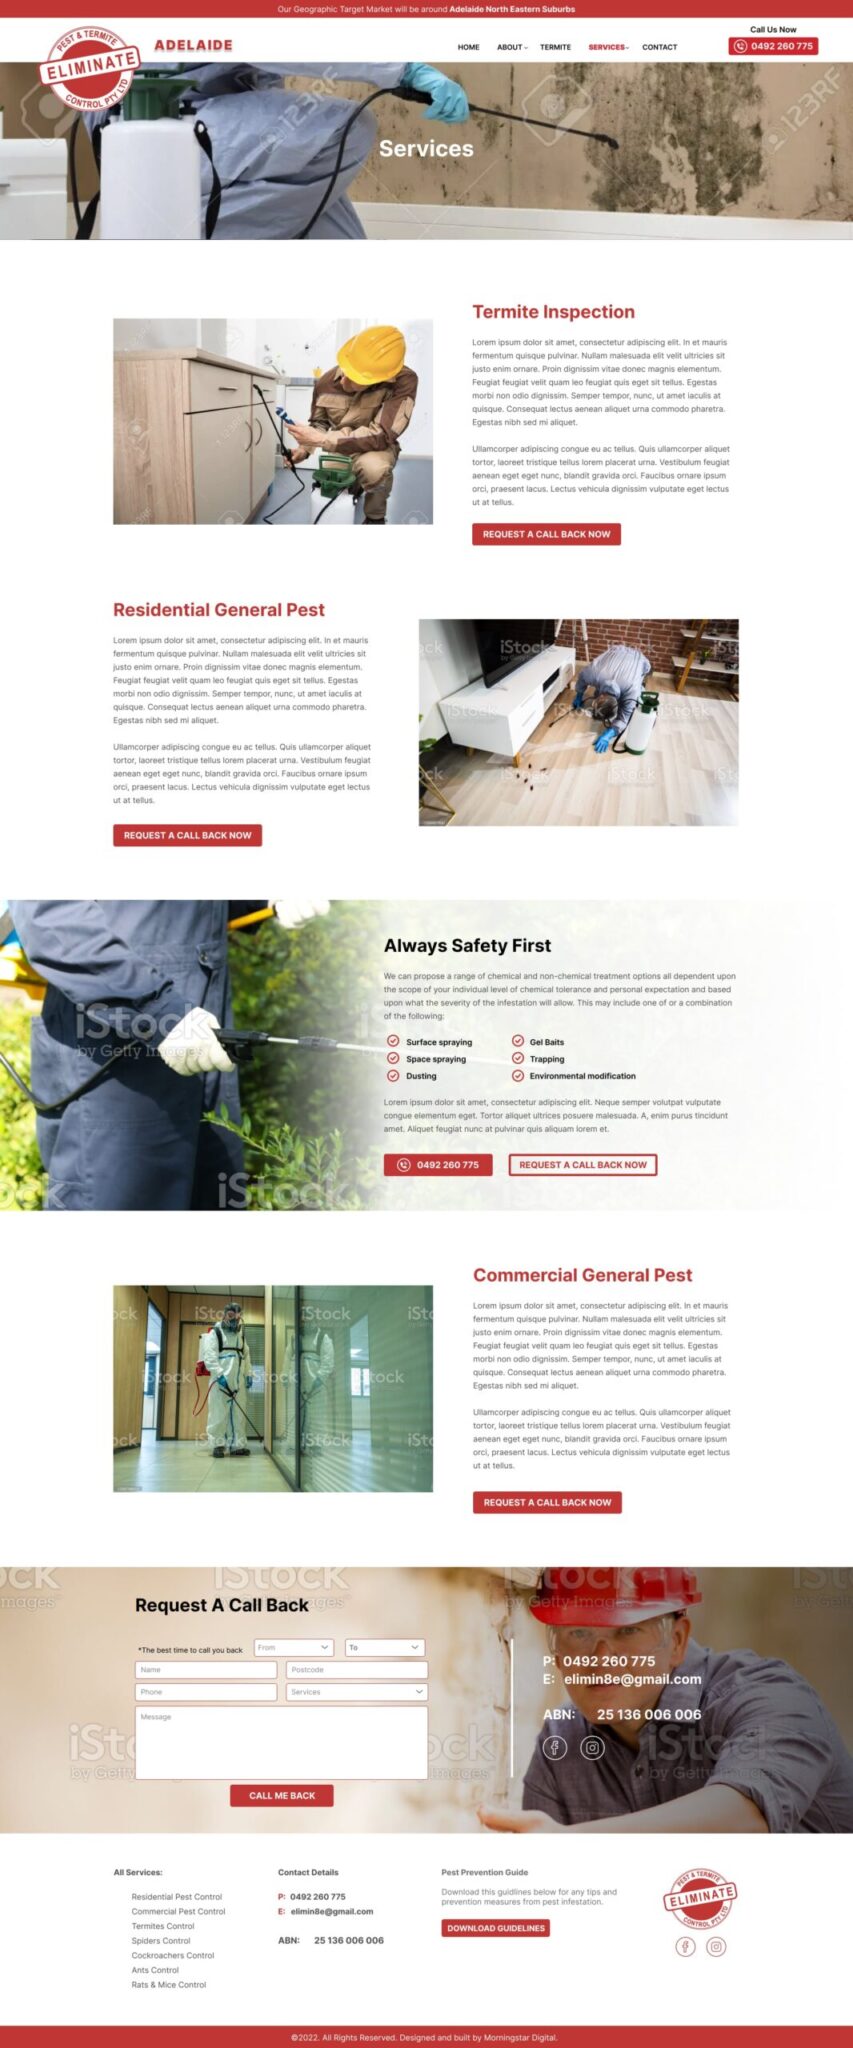 Eliminate Pest & Termite Control Services